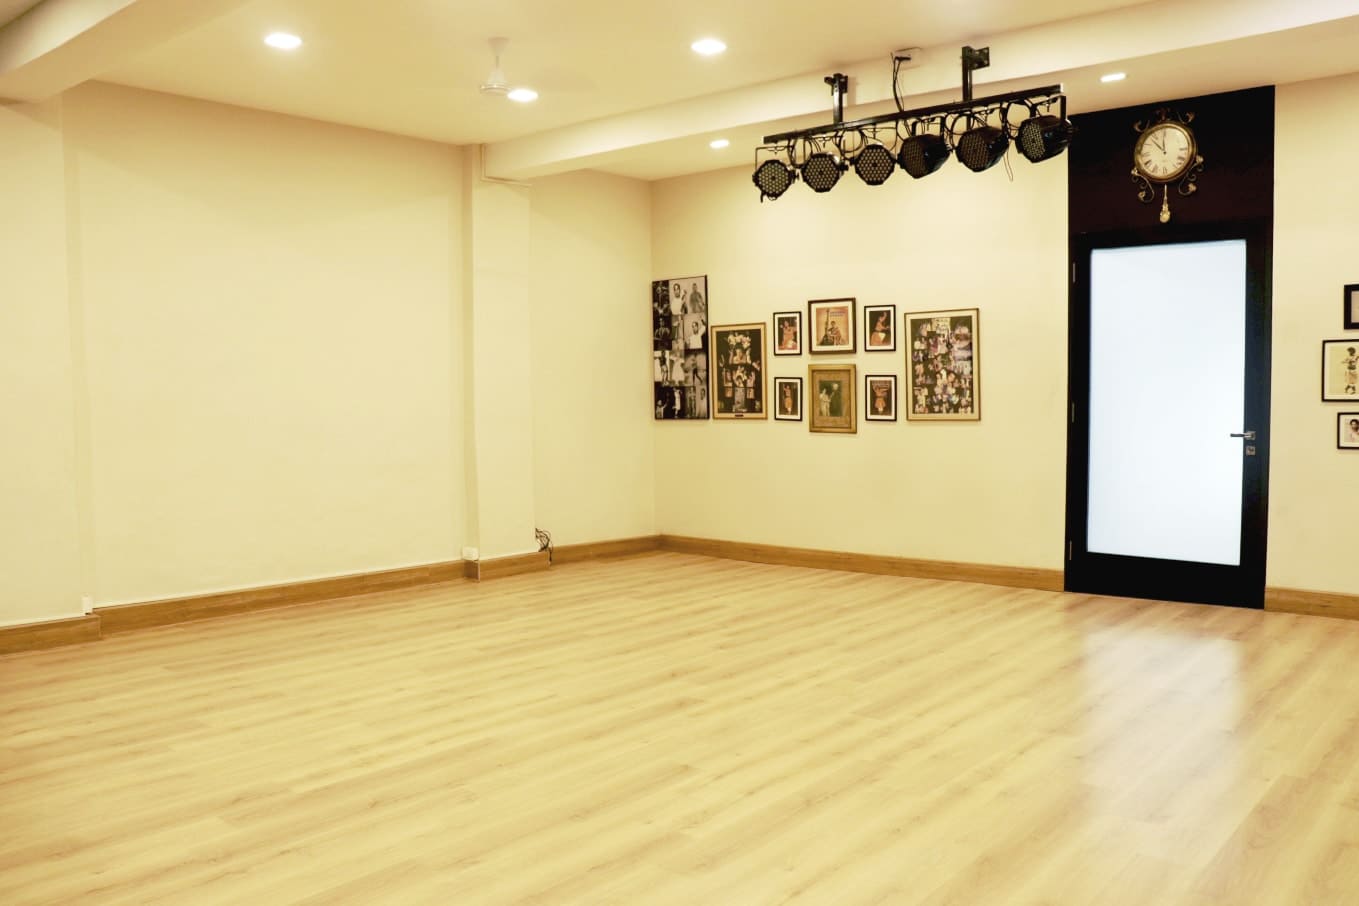 Natanam Studio For Performing Arts